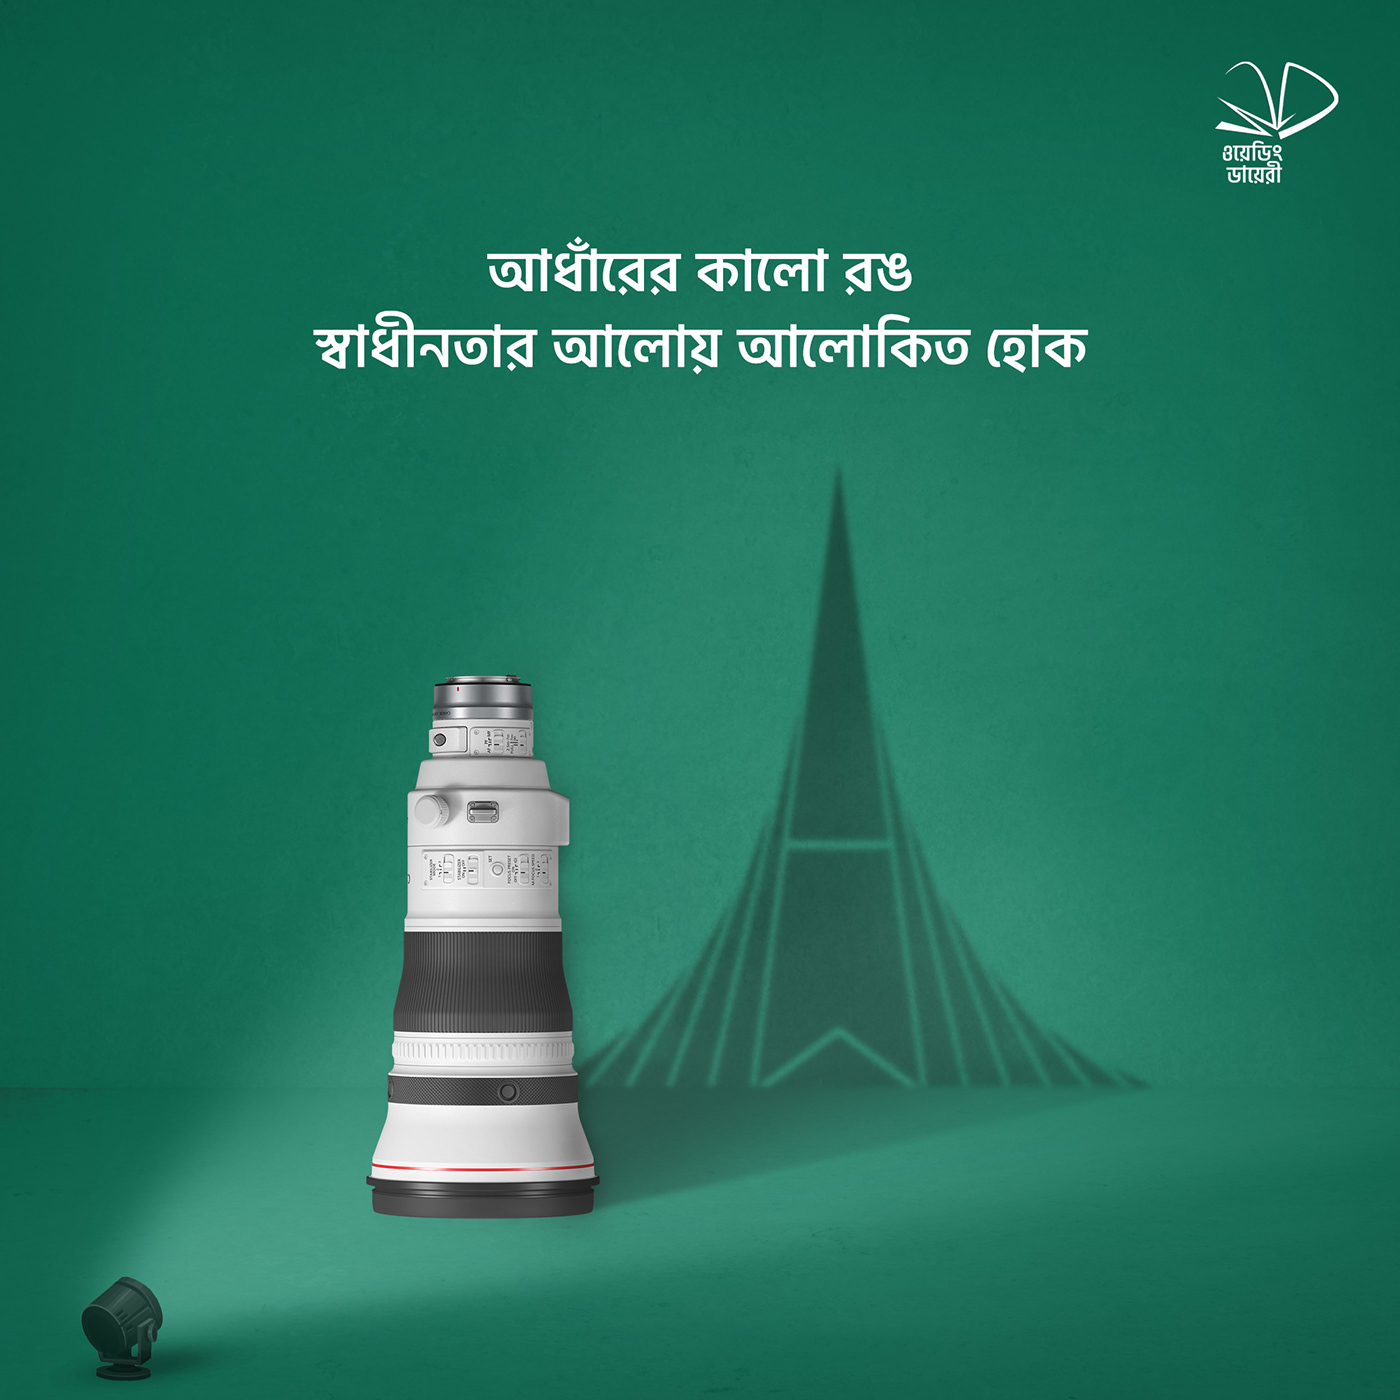 26 March independence day ২৬ মার্চ স্বাধীনতা দিবস 26th march Advertising  Bangladesh independence day Shadhinota Dibosh Social media post মহান স্বাধীনতা দিবস স্বাধীনতা দিবস